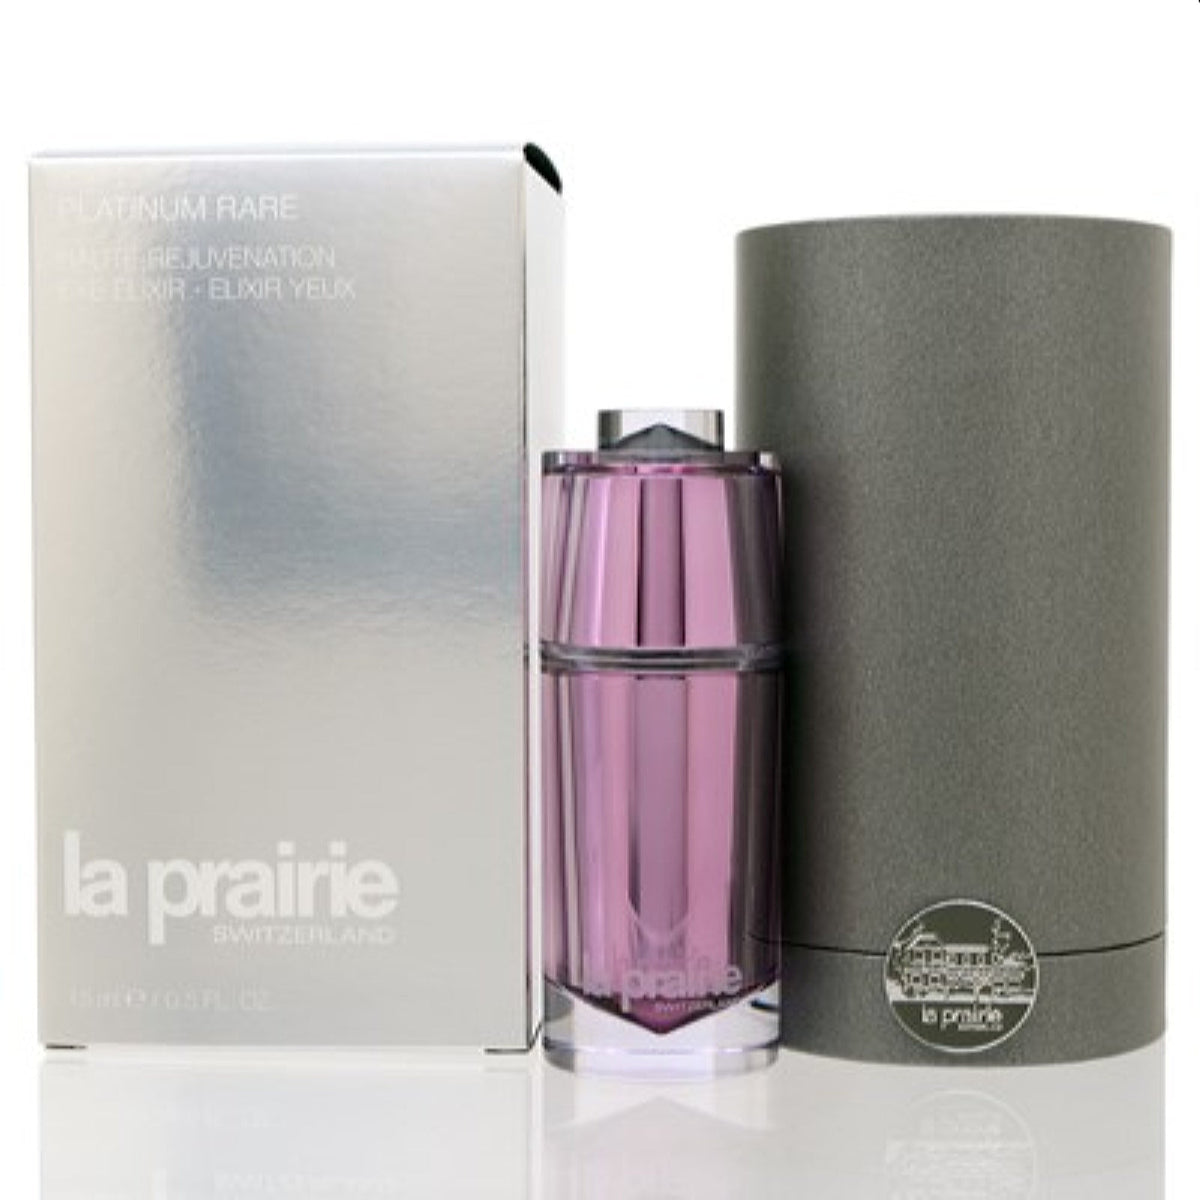 La Prairie Platinum Rare Haute-Rejuvenation Eye Elixir 0.5 Oz (15 Ml)  